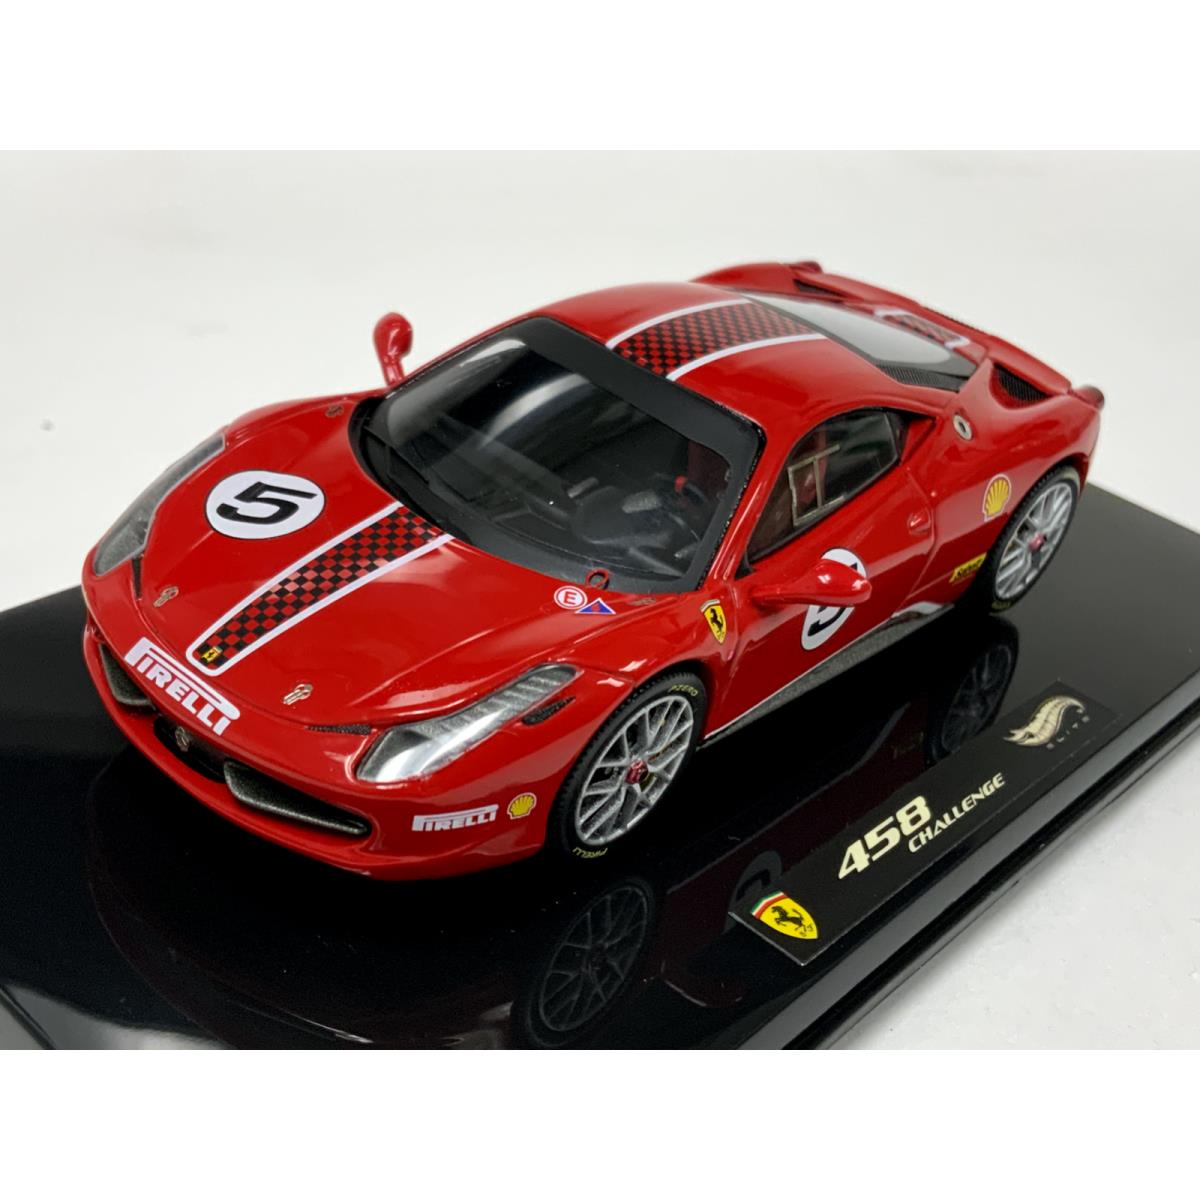 1/43 Hot Wheels Elite Ferrari 458 Italia Challenge Presentation X5504 CF223